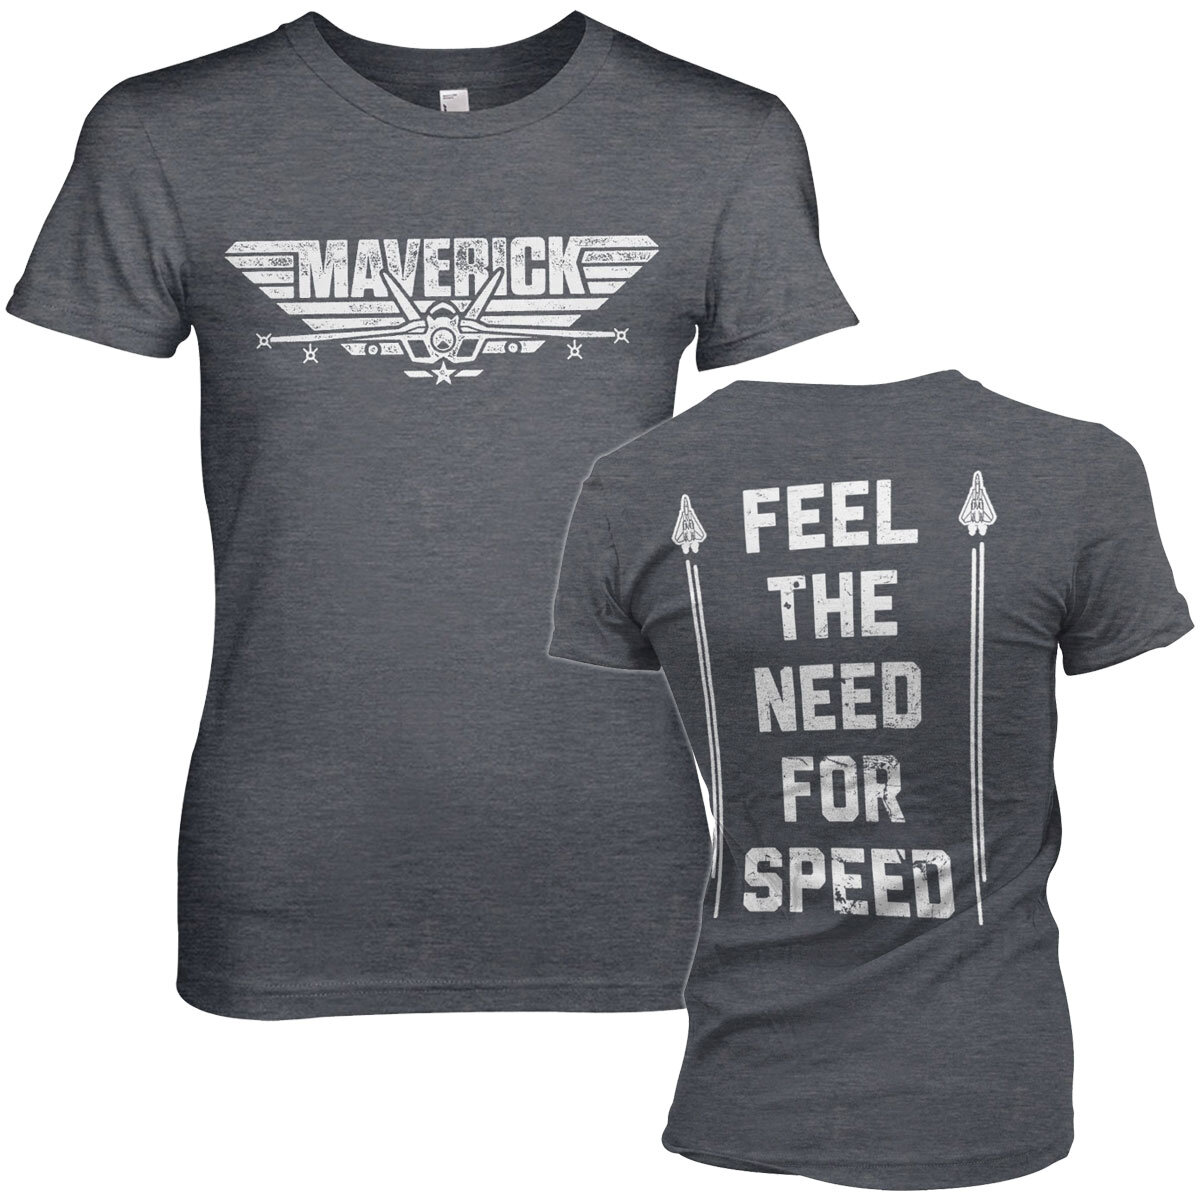 Top Gun Maverick - Need For Speed Girly Tee